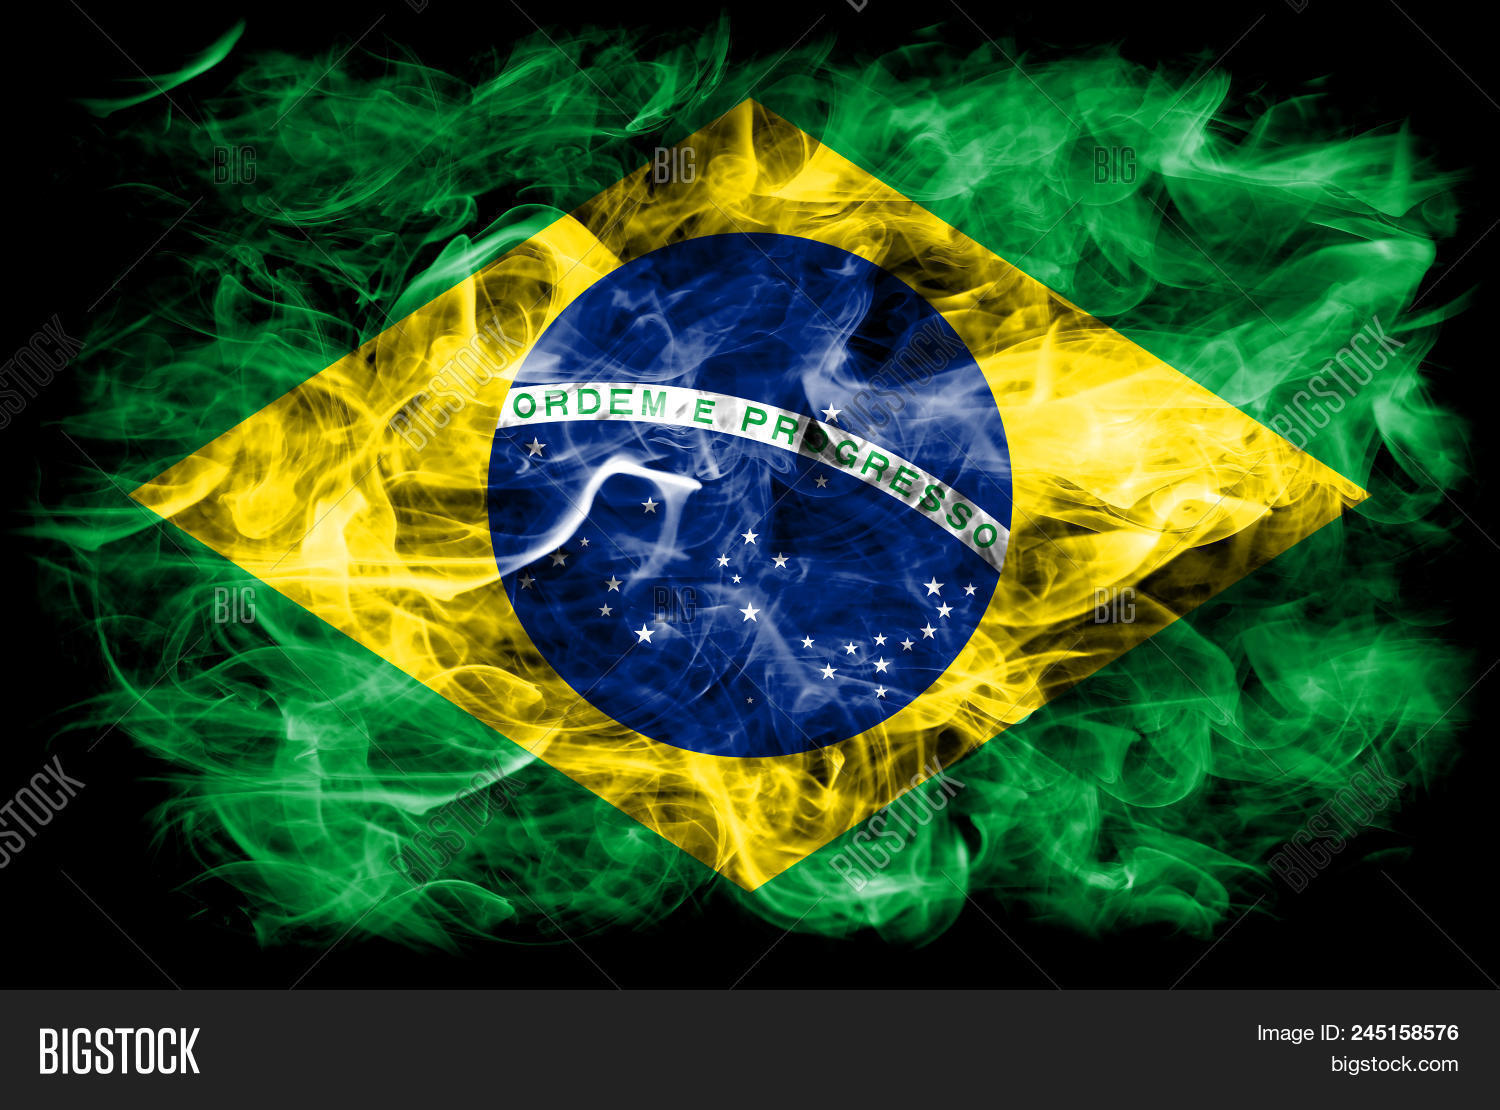 Brazil smoke flag on image photo free trial bigstock